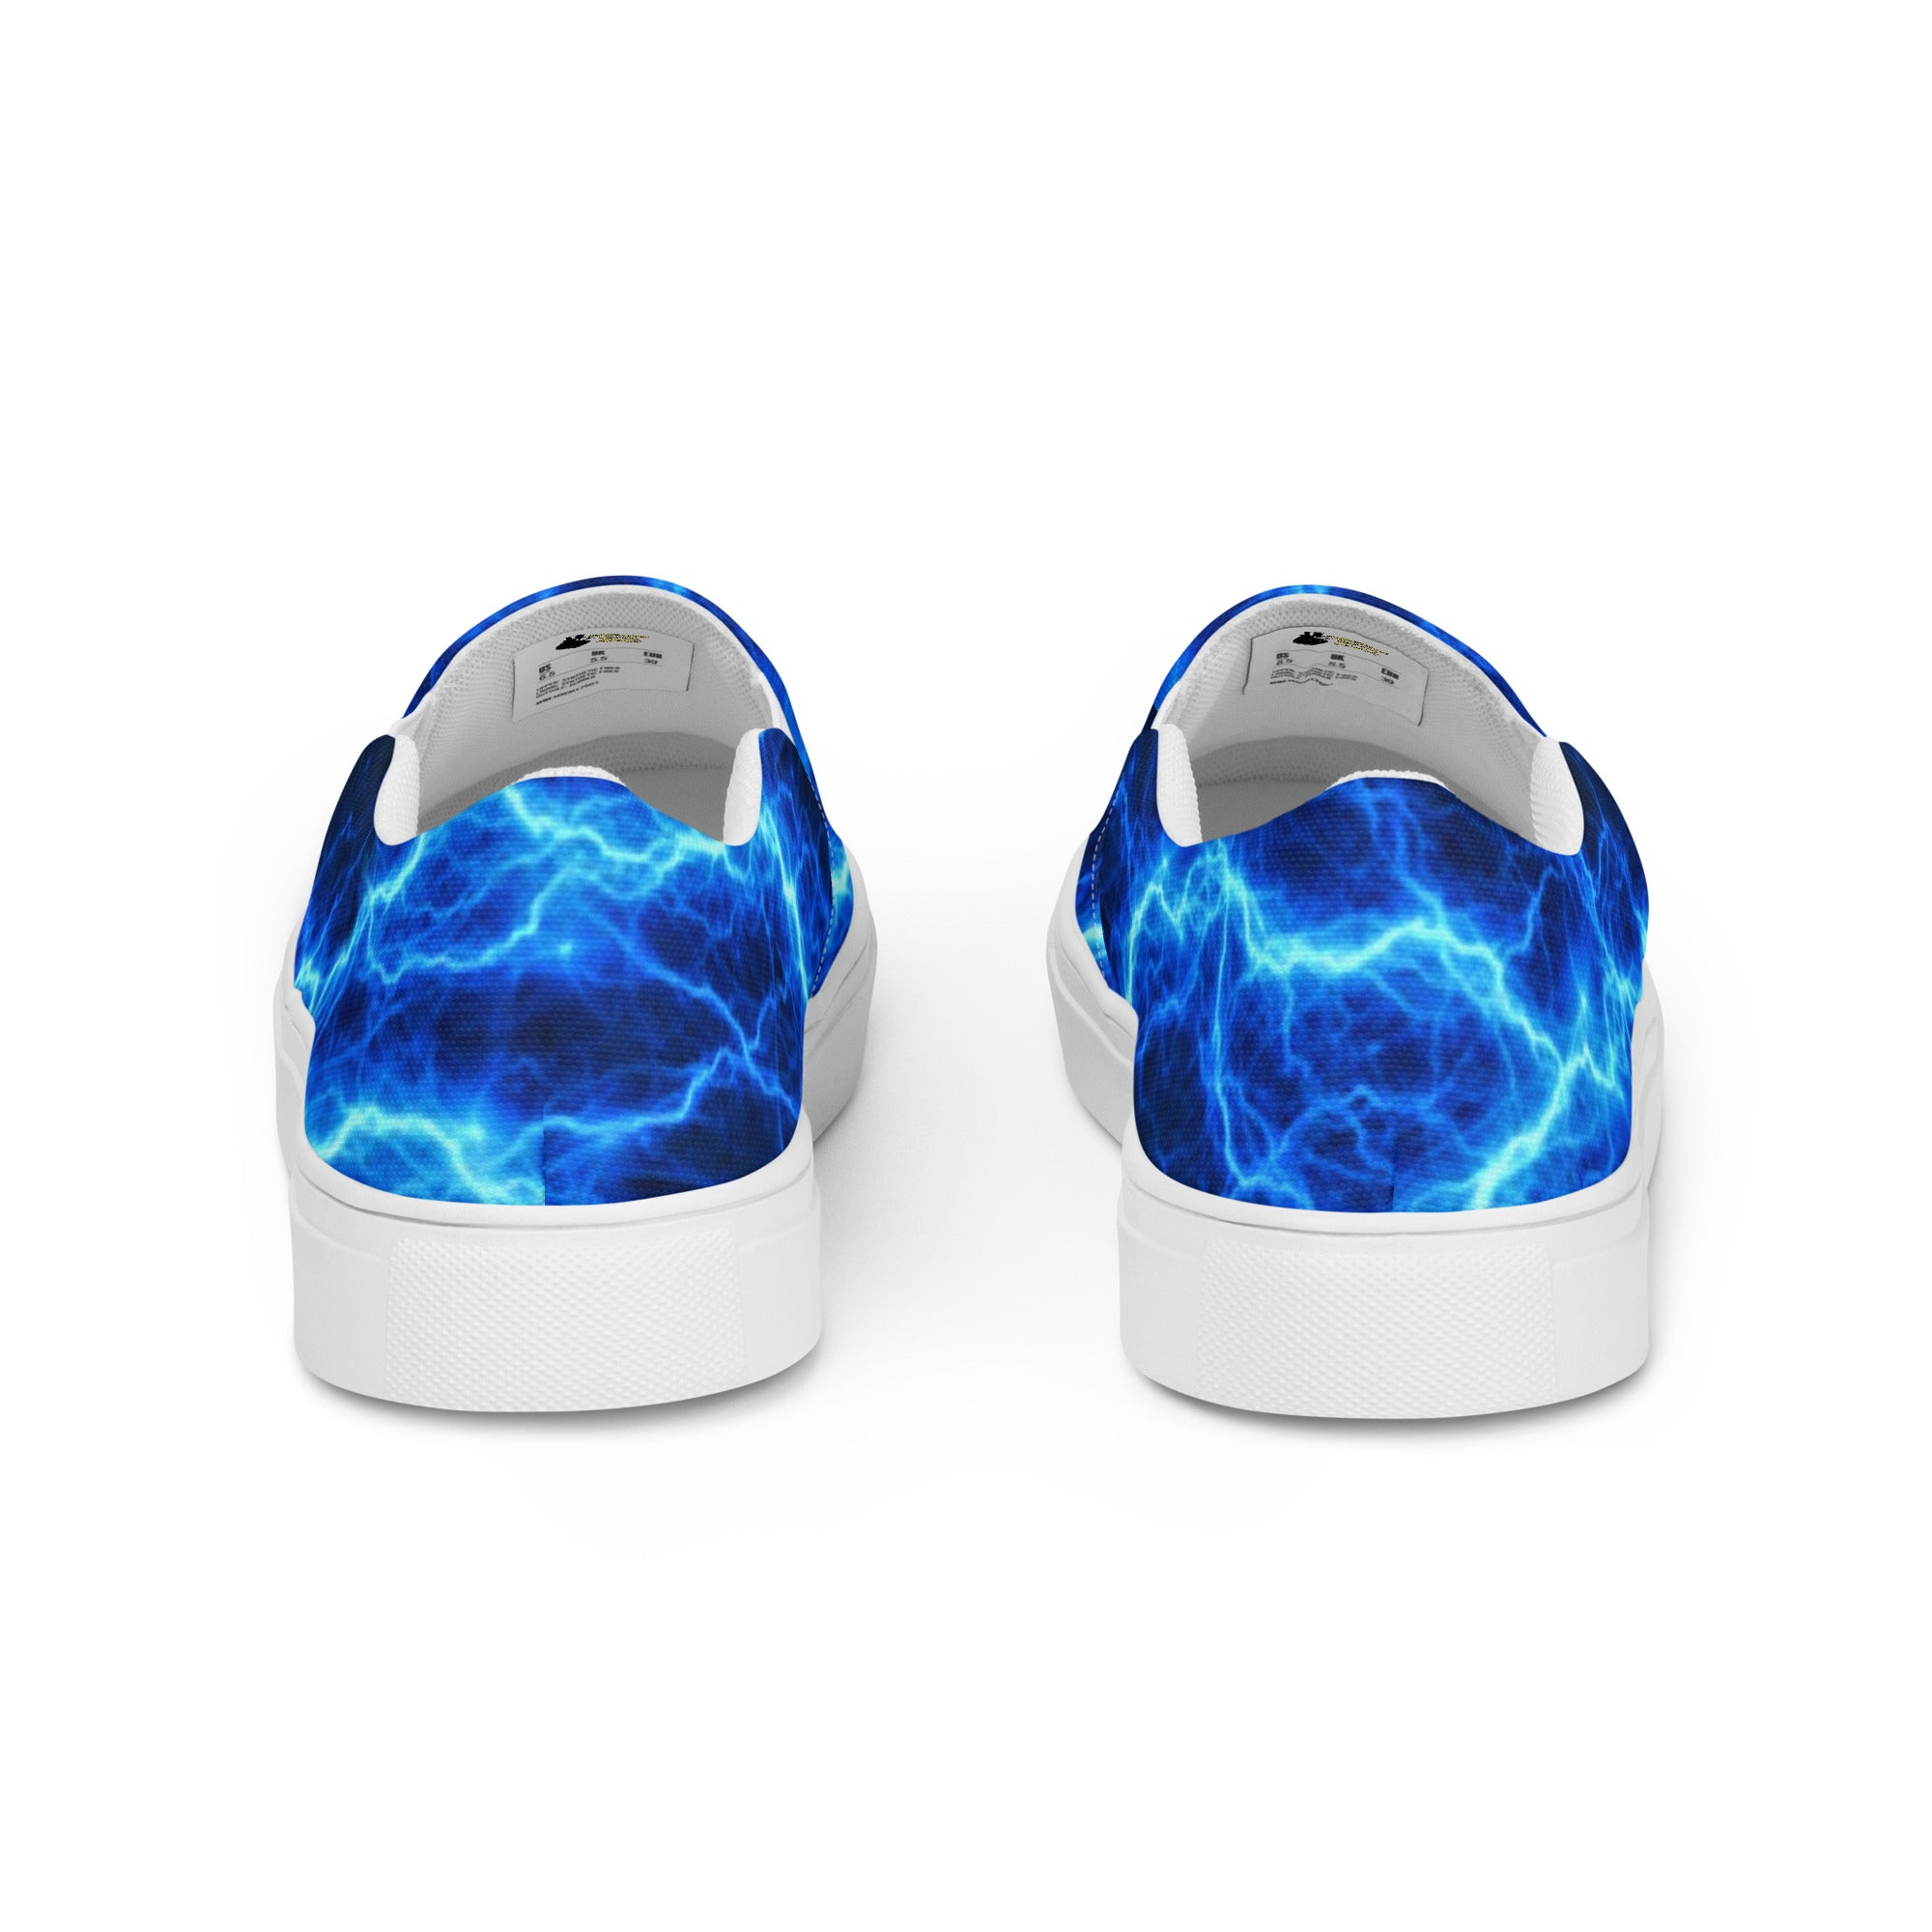 Blue Lightning Men’s Slip-on Canvas Shoes